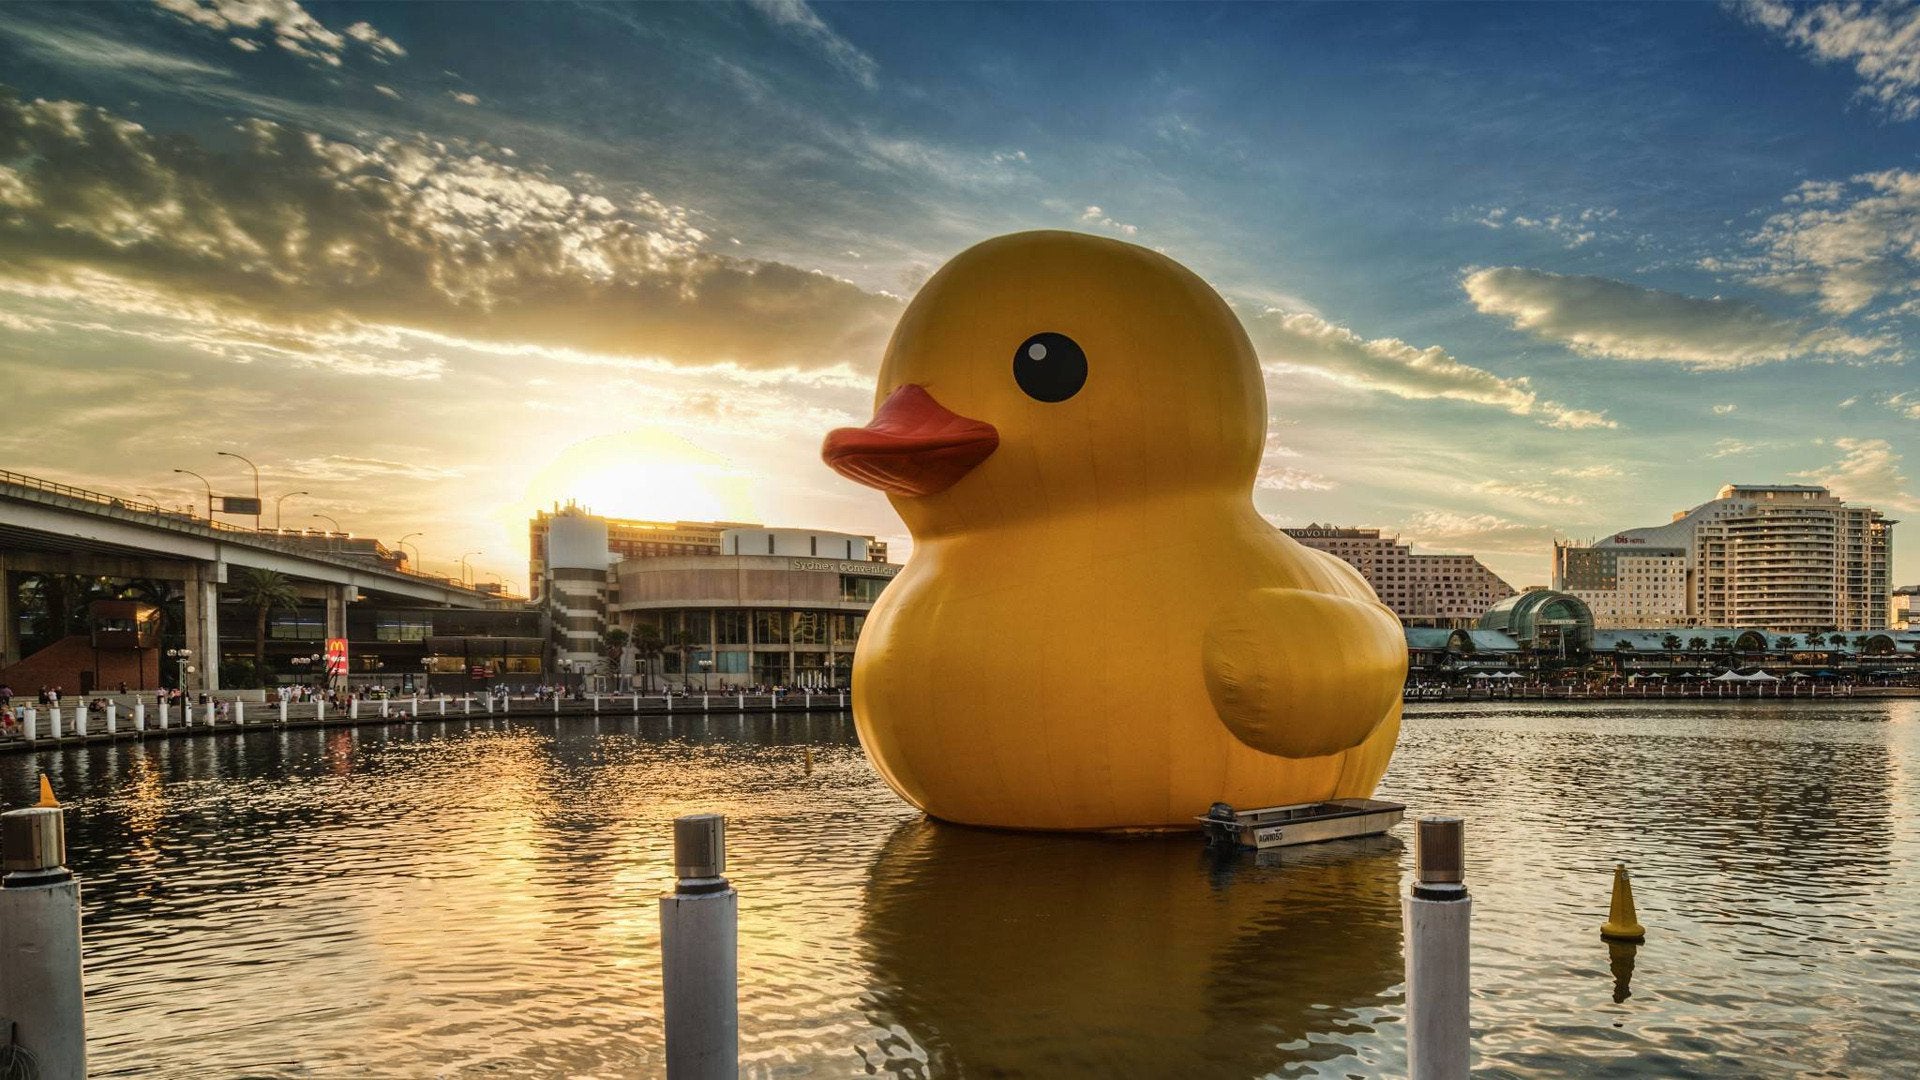 Sydney's giant rubber duck [1920x1080]